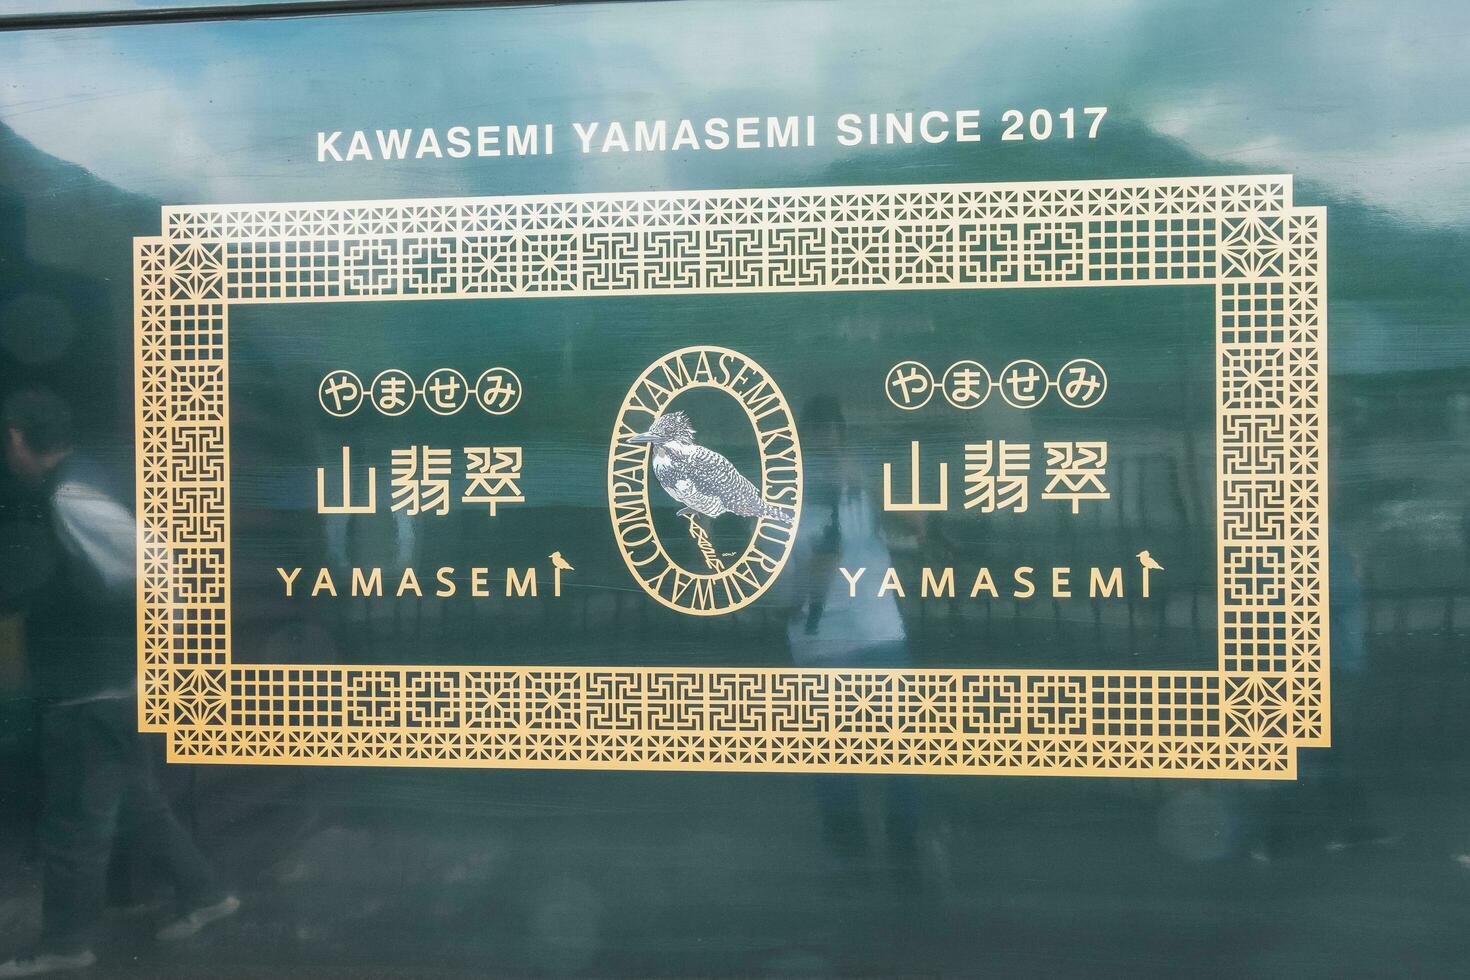 kumamoto, kyushu, japón - octubre 19, 2018 jr kyushu tren limitado Rápido kawasemi yamasemi, hitoyoshi kuma región foto